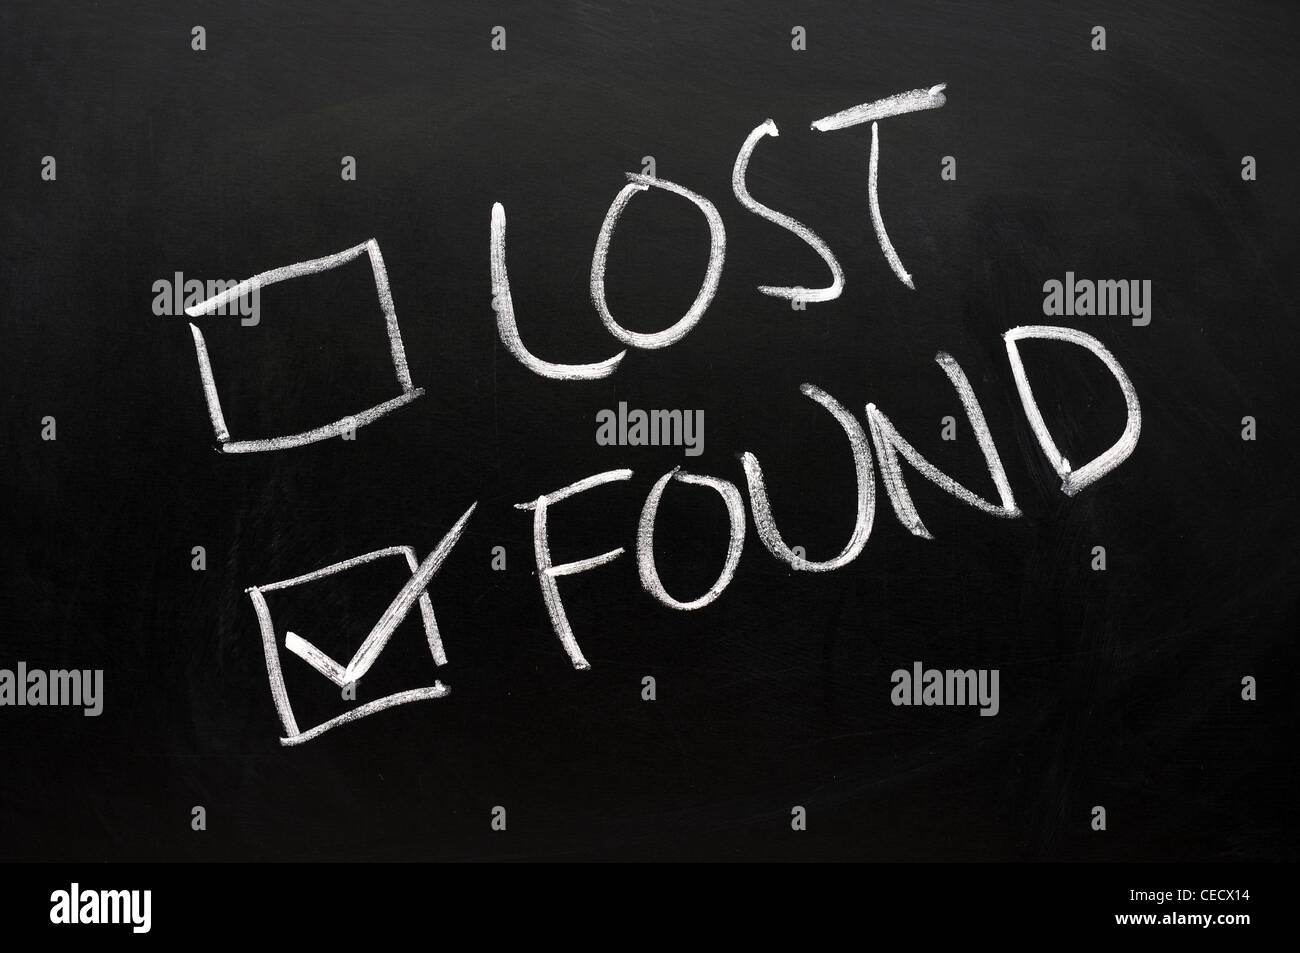 lost found discovery background check box concept blackboard black chalkboard blank empty write space board copy chalk white Stock Photo